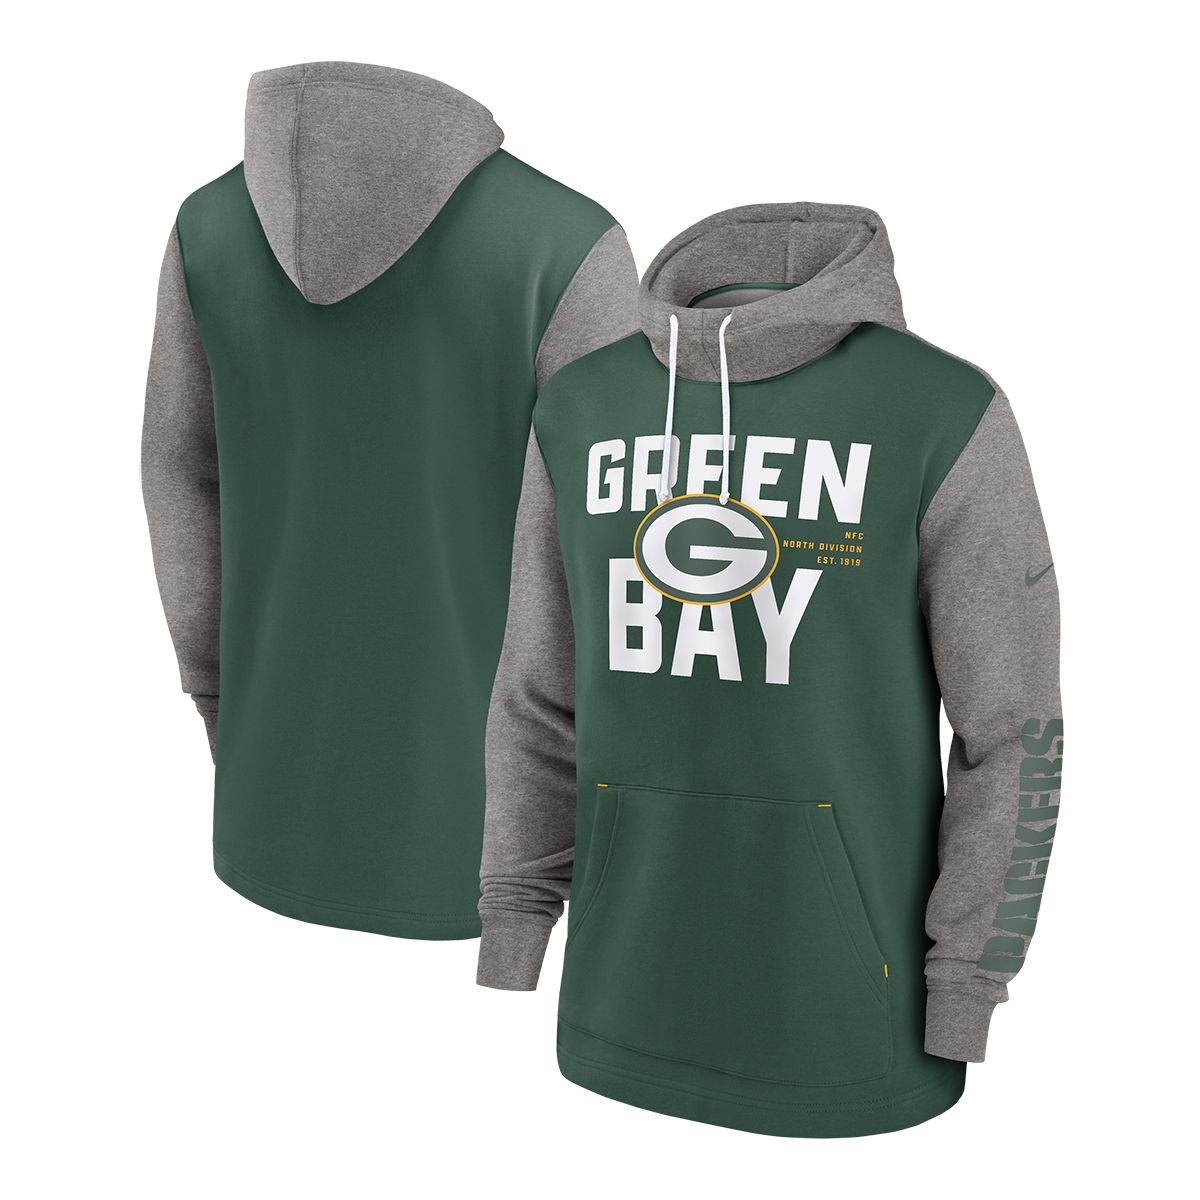 Green Bay Packers Women Plus Size Dress Casual Short Sleeve Skirt